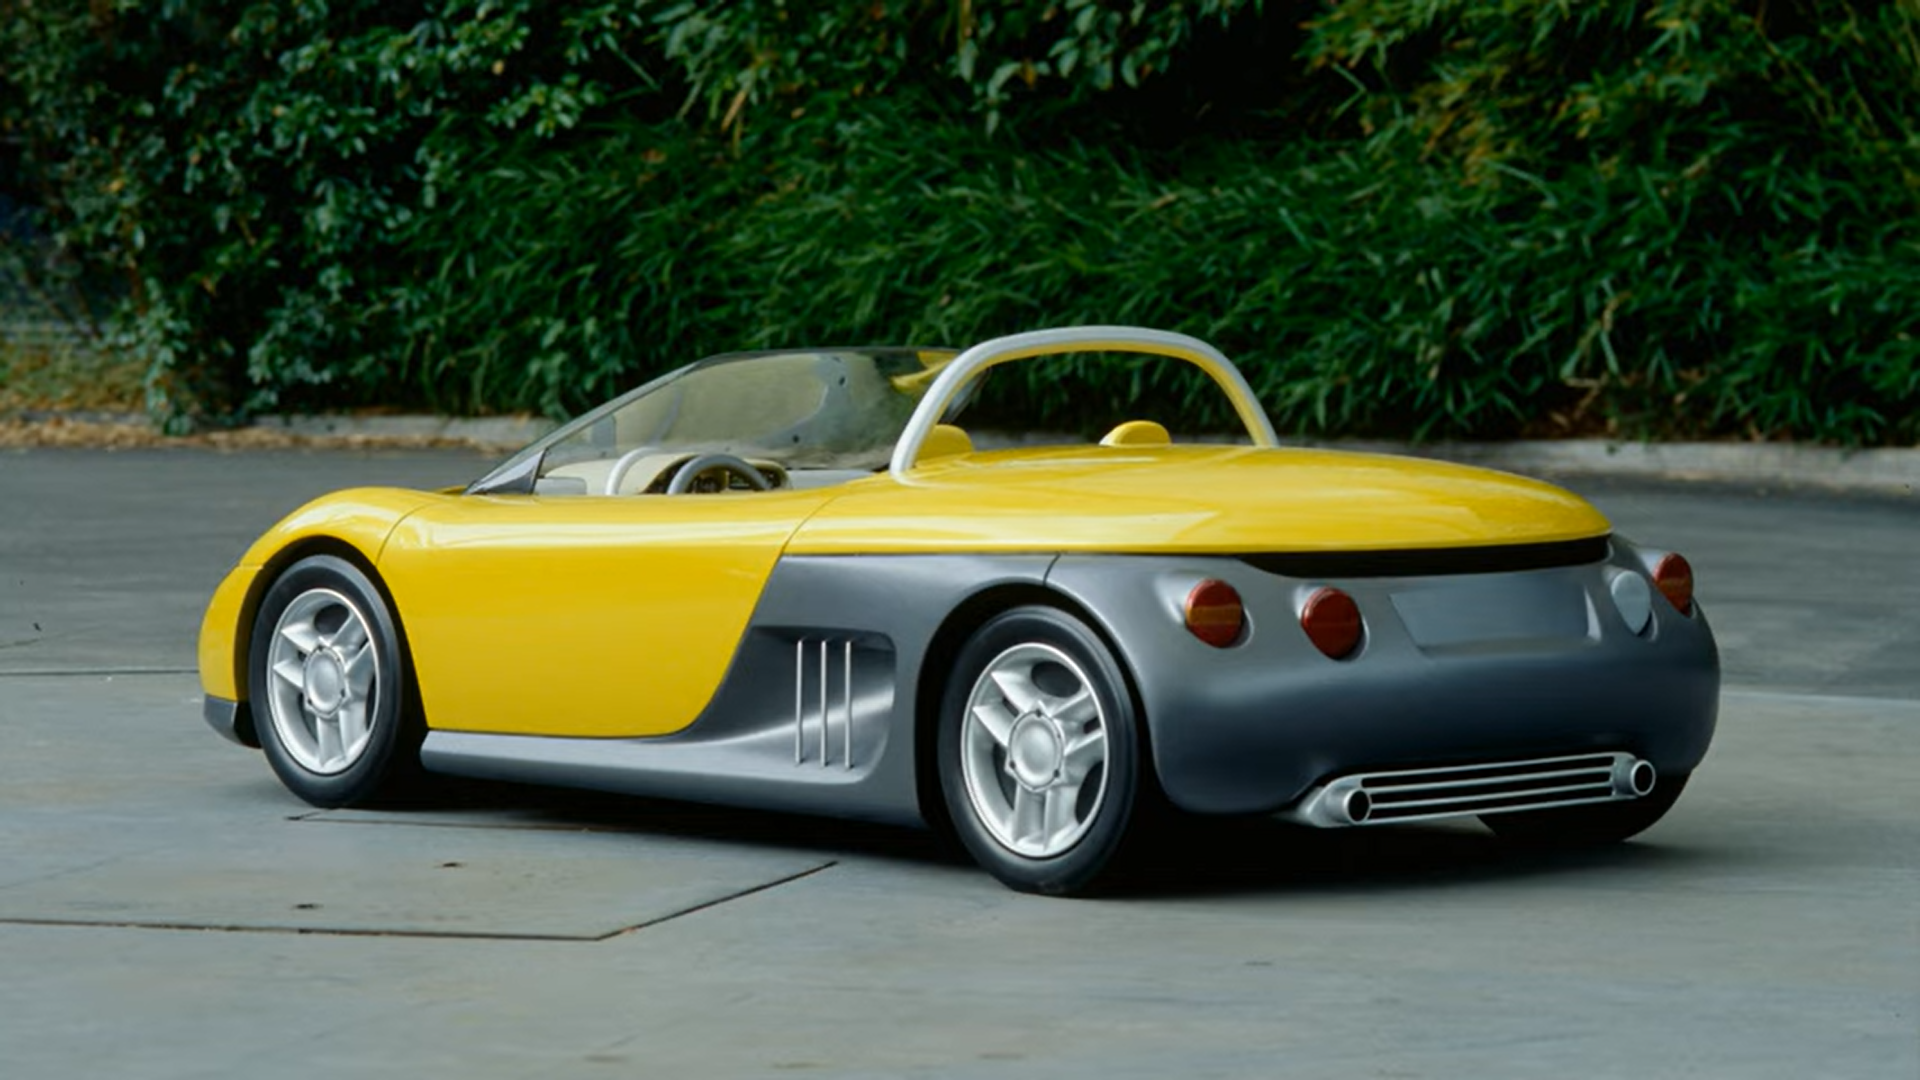 1994 Renault Sport Spider concept